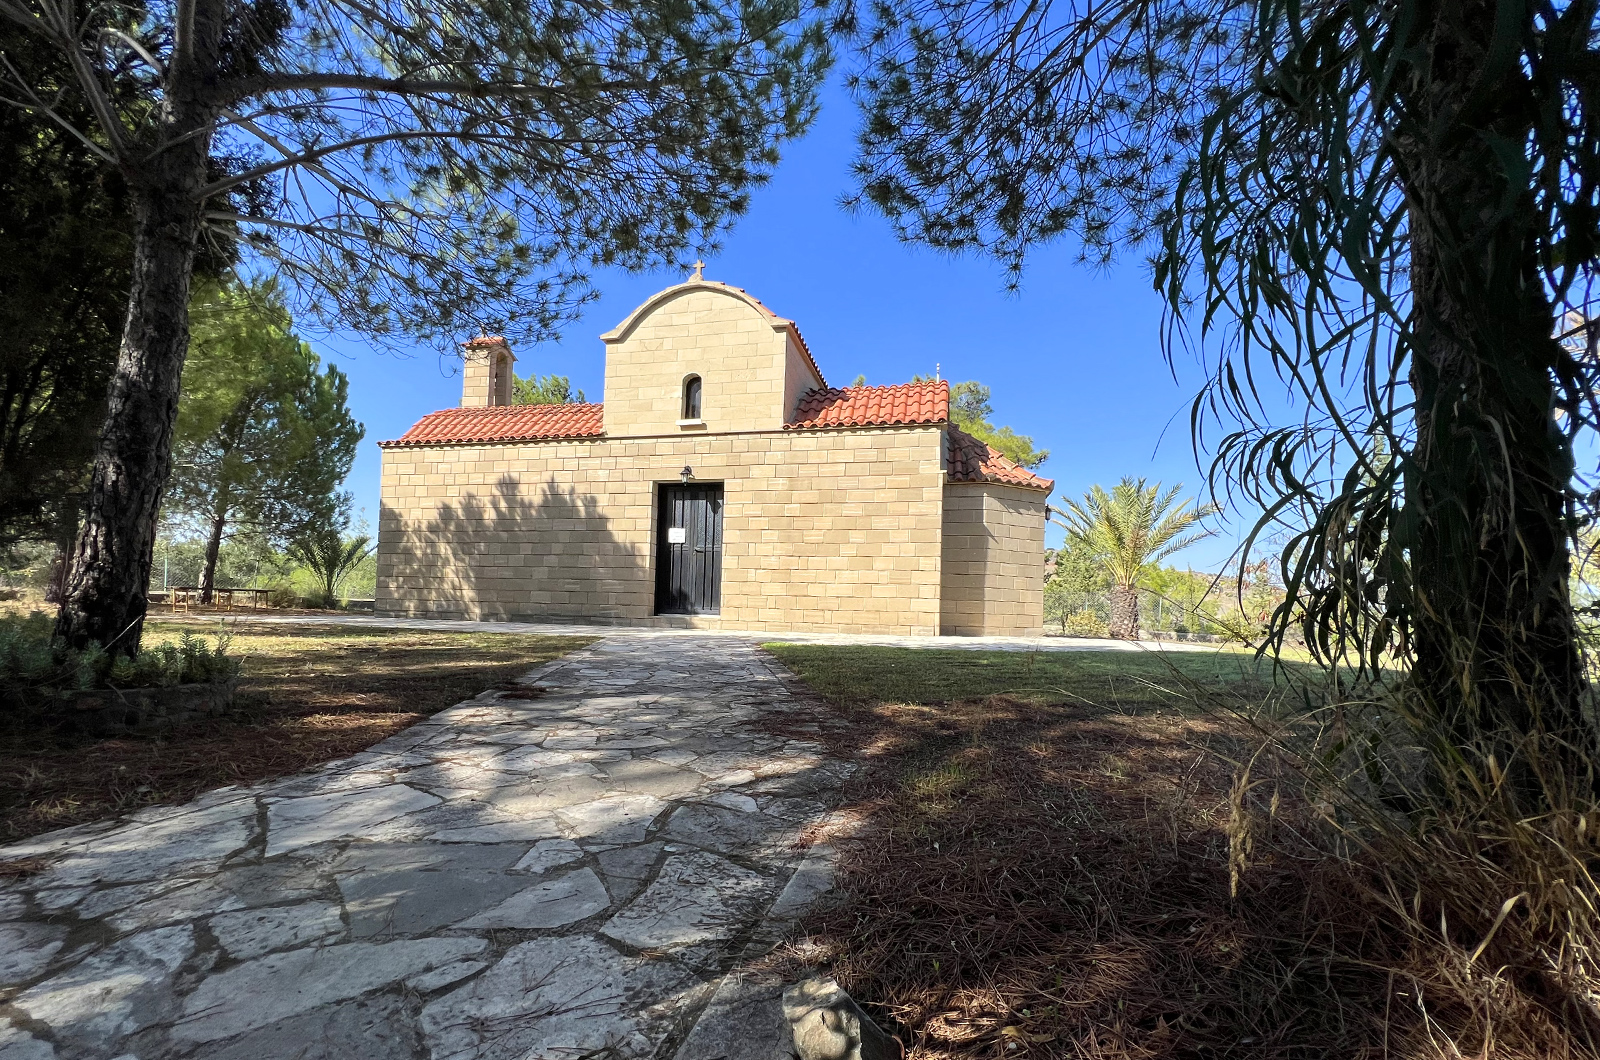  13 Martyrs Chapel in Pyrga